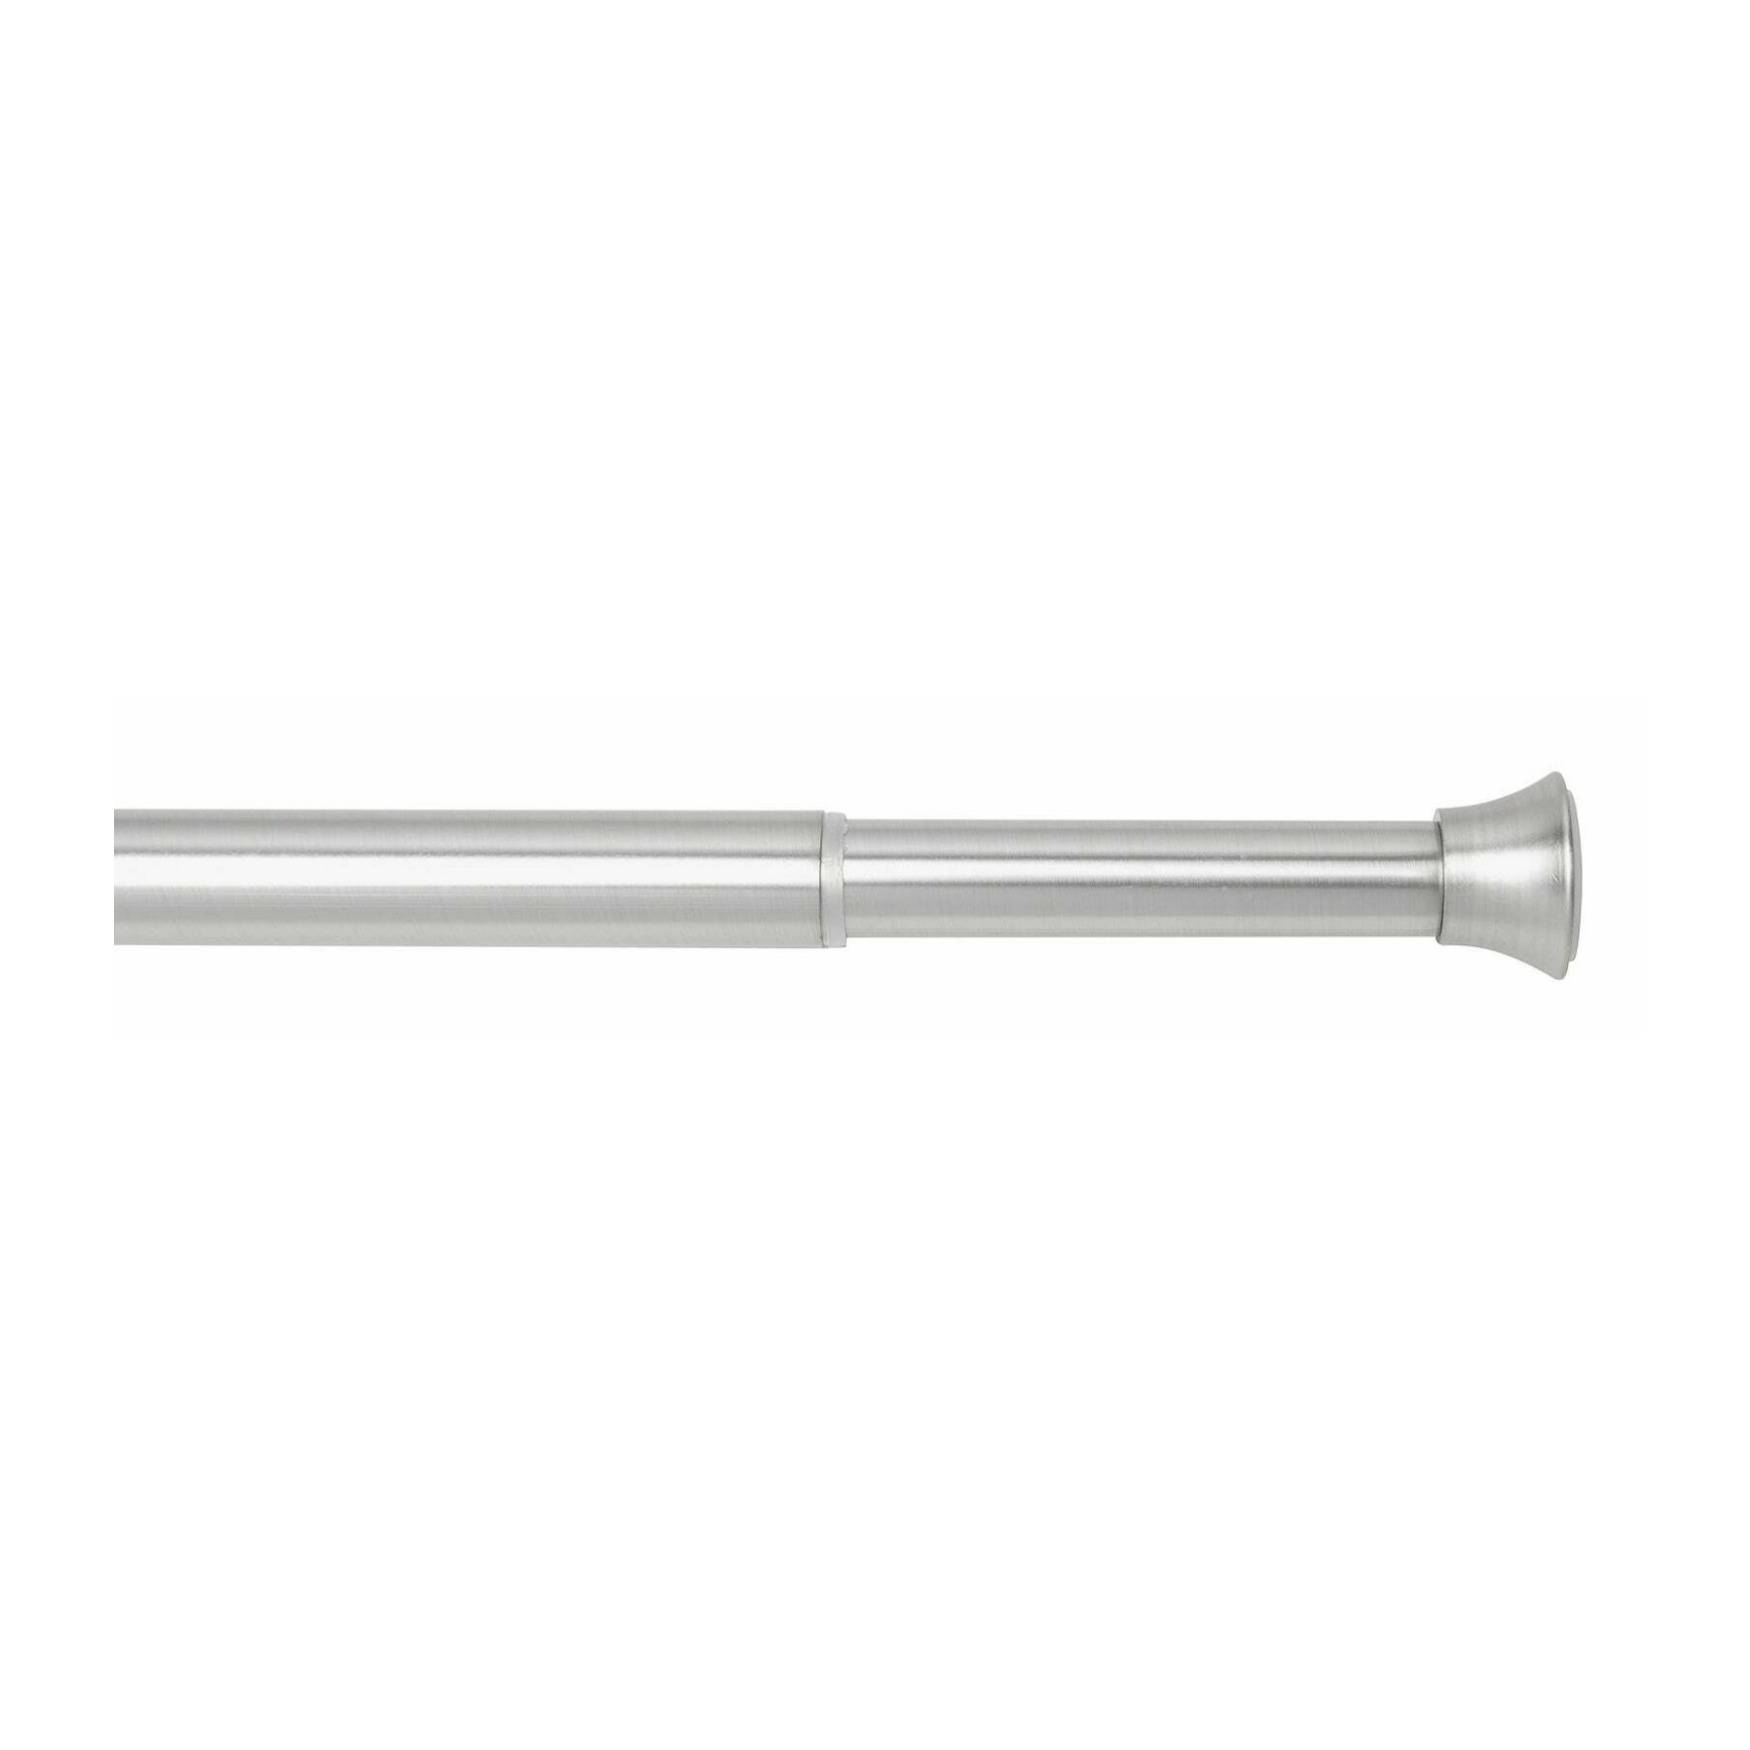 Umbra Chroma Tension Rod (36 to 54-Inch, Nickel)